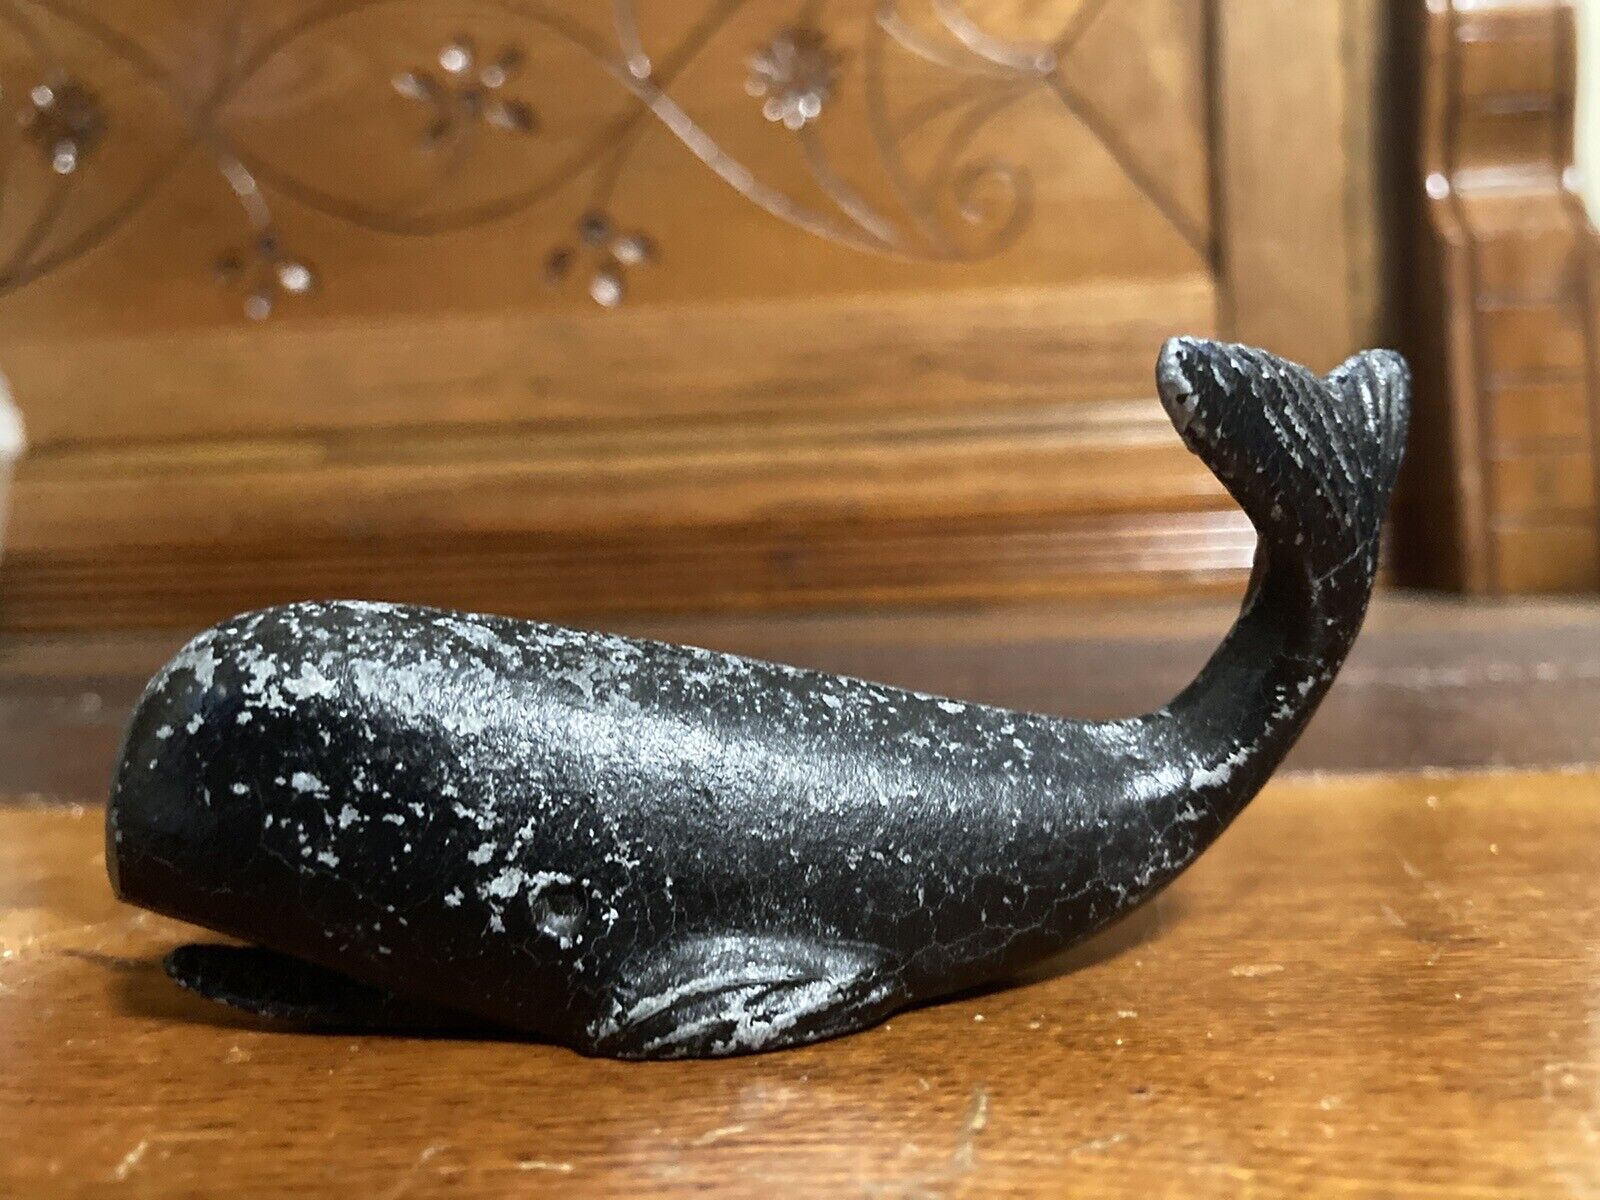 Vintage Sperm Whale solid cast metal paperweight ~ Nautical decor